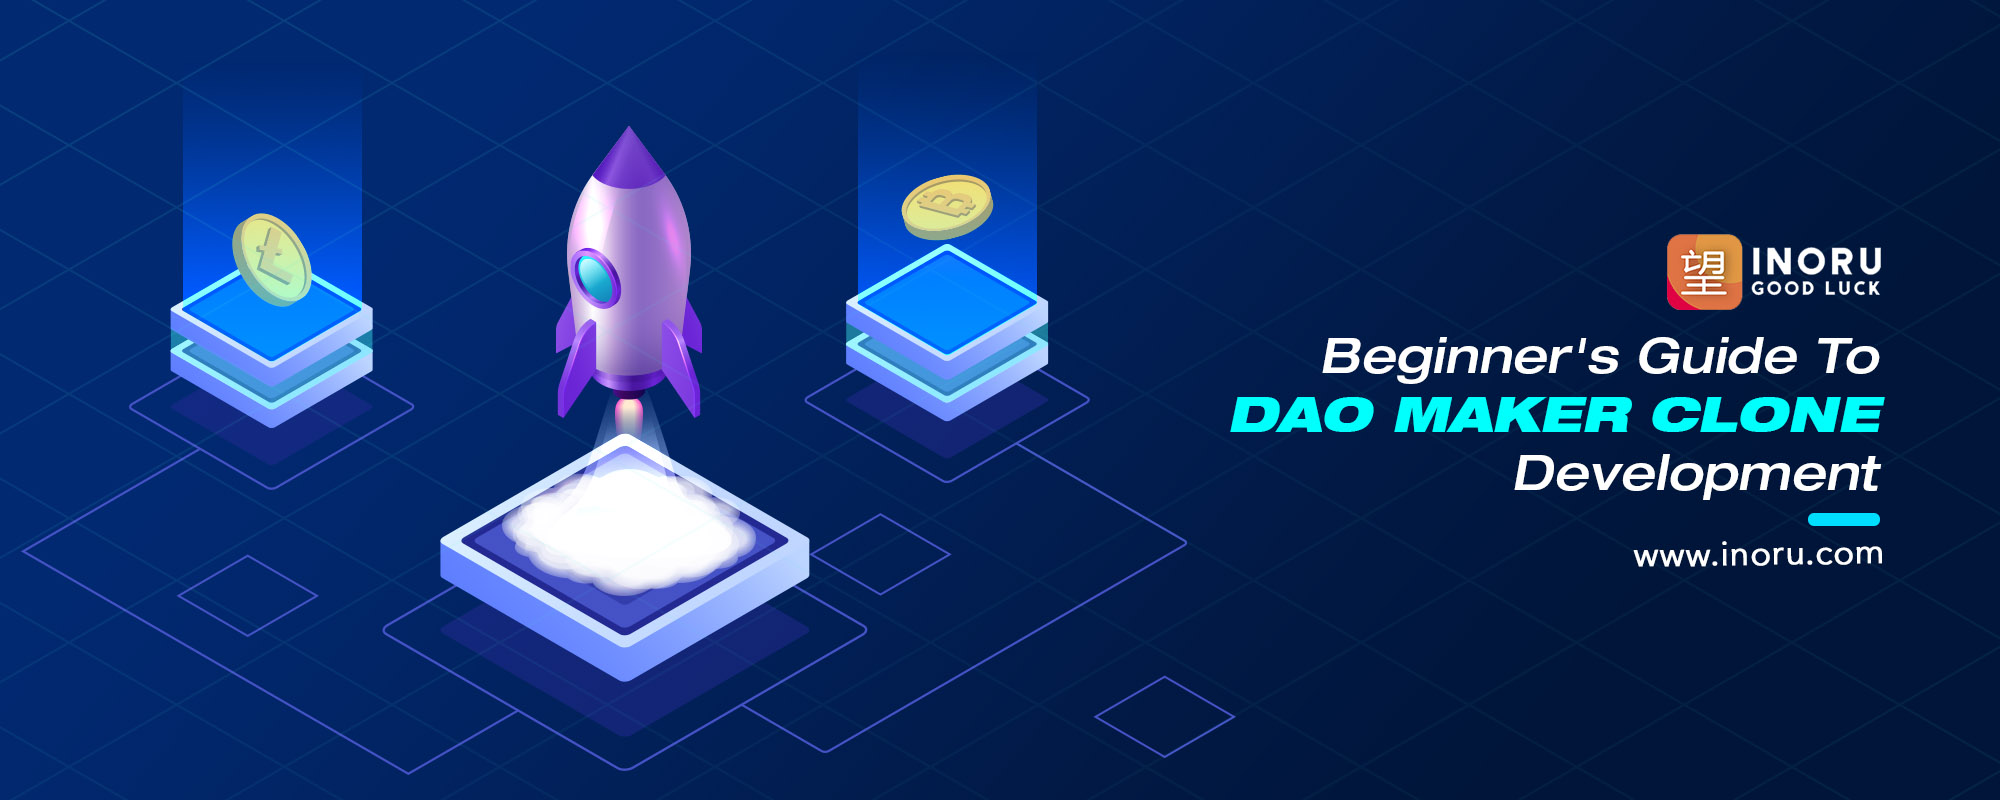 DAO Maker Clone Development